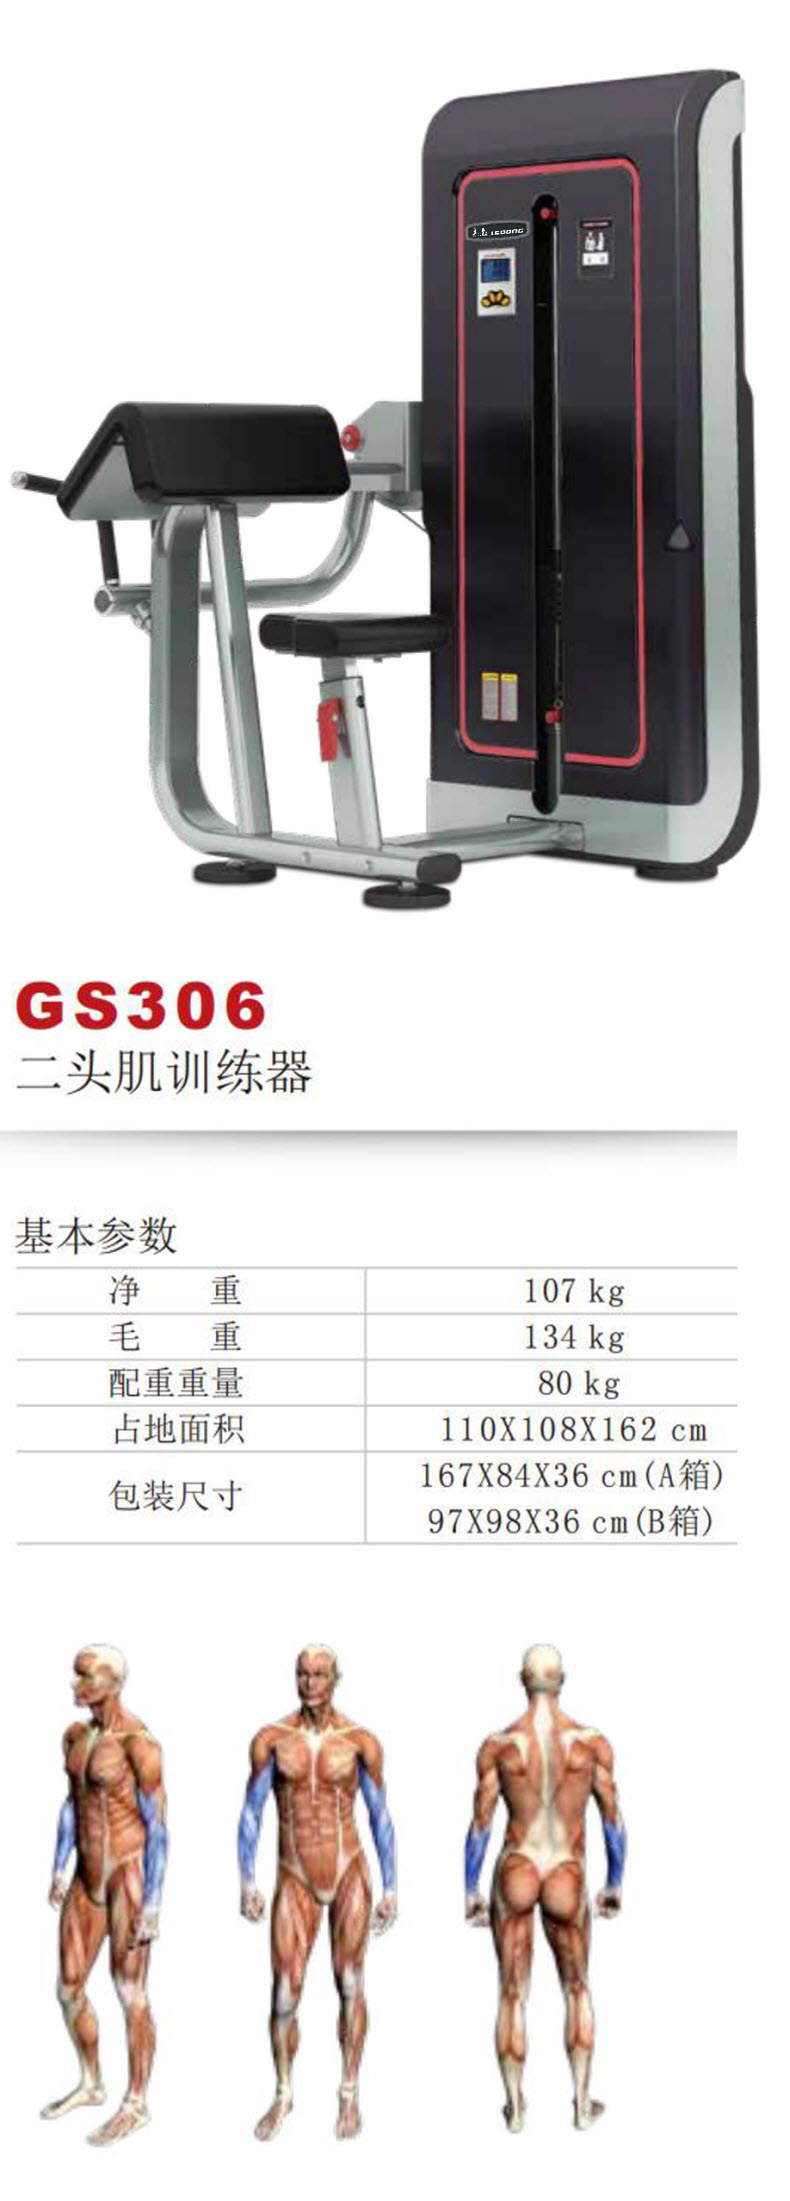 GS306S.jpg